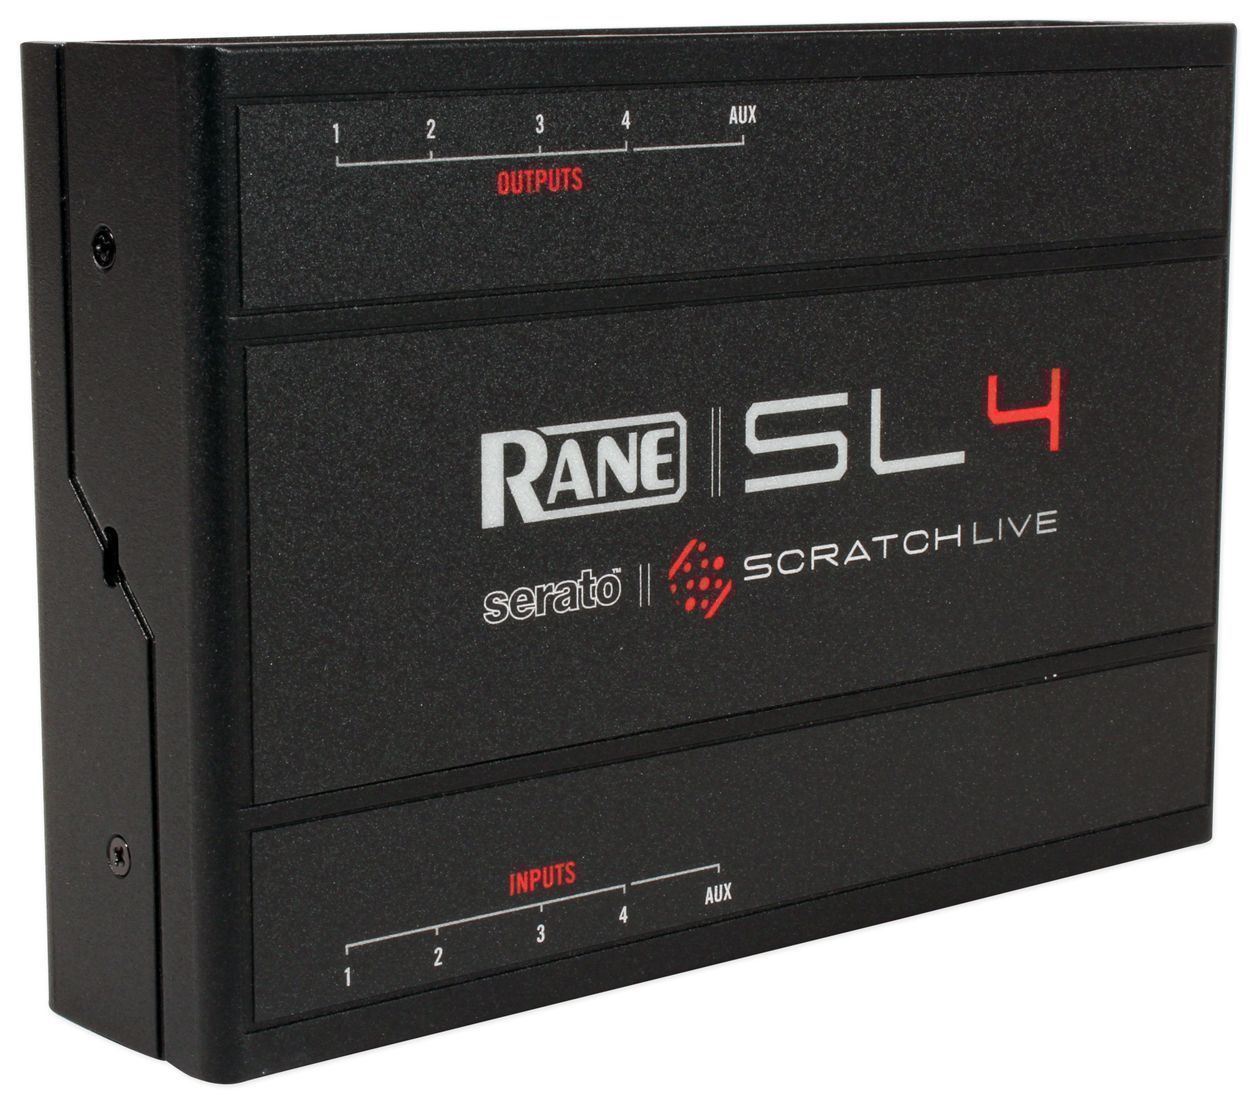 RANE SL 4 4-Deck DJ Midi Controller Serato Scratch Interface+Wireless